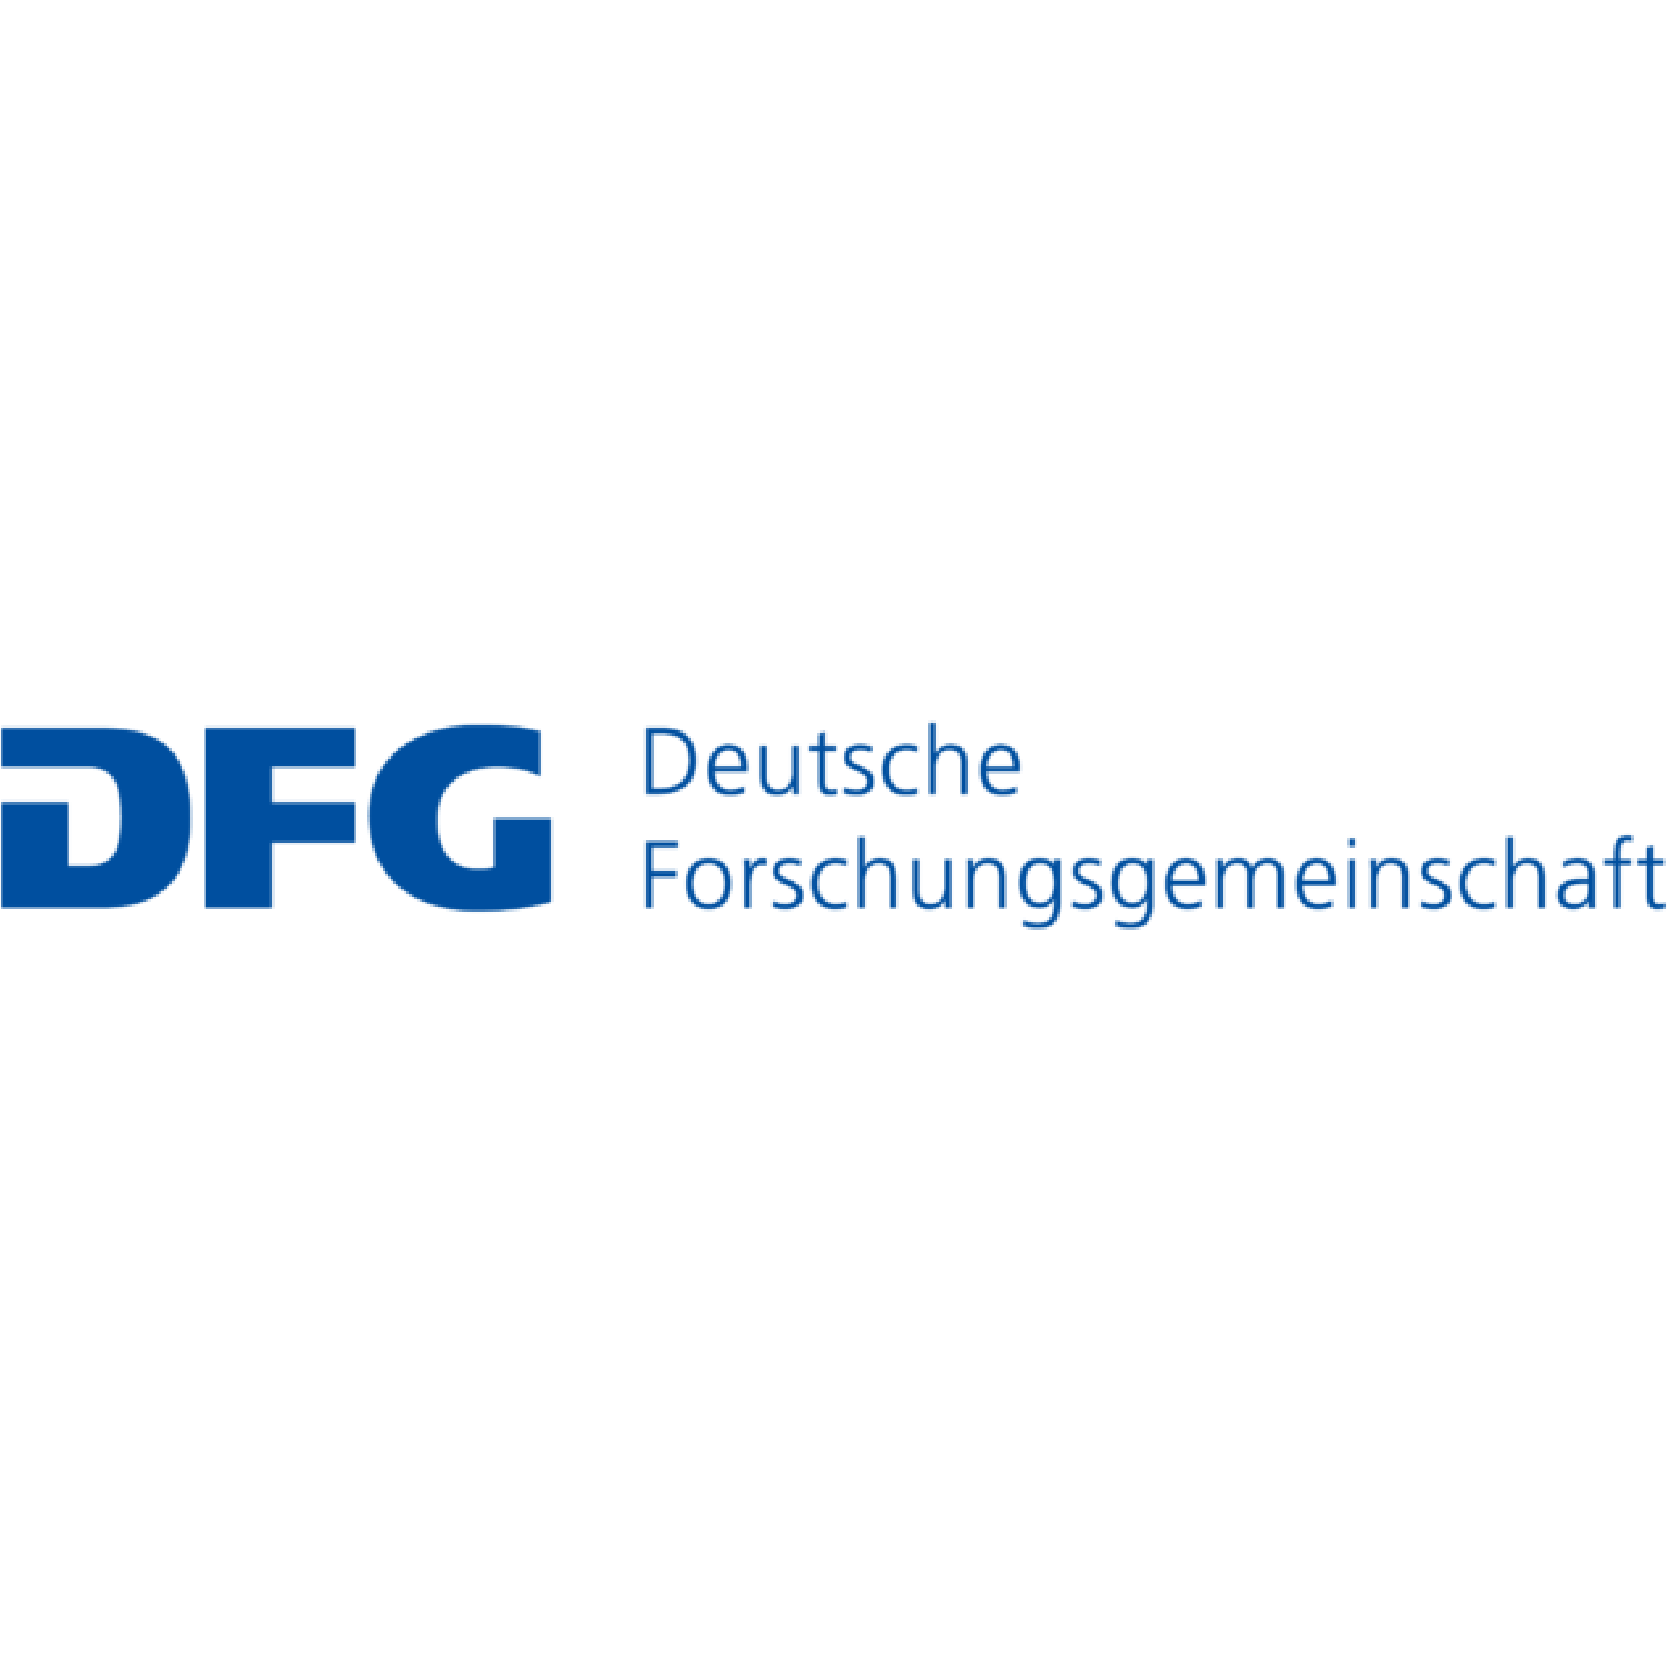 German Research Foundation (Deutsche Forschungsgemeinschaft, DFG)